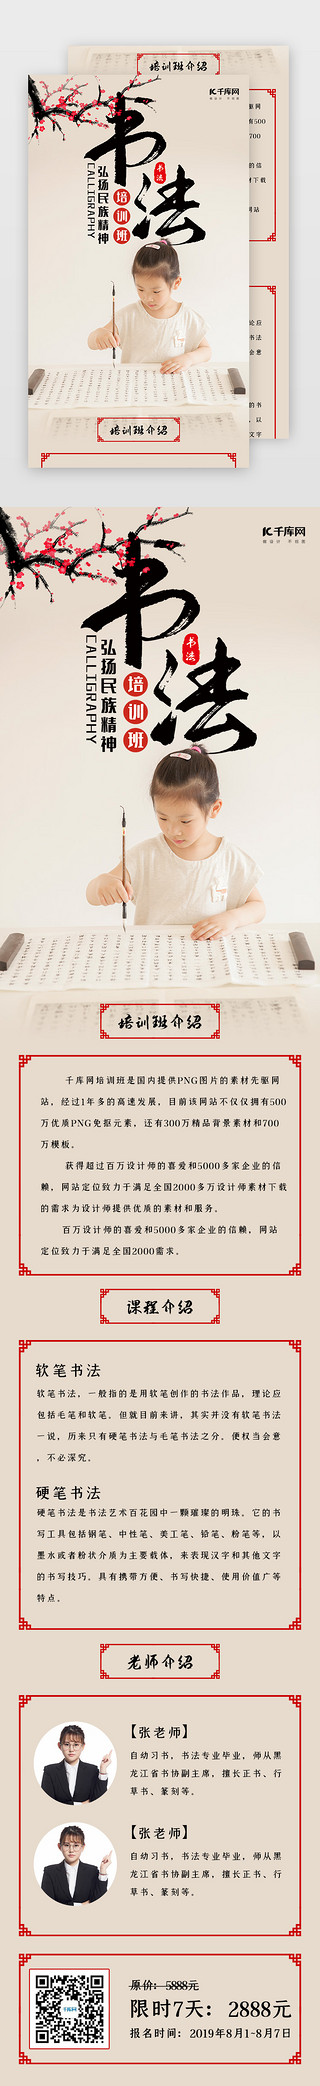 ps艺术毛笔字UI设计素材_创意中国风书法培训教育h5长图